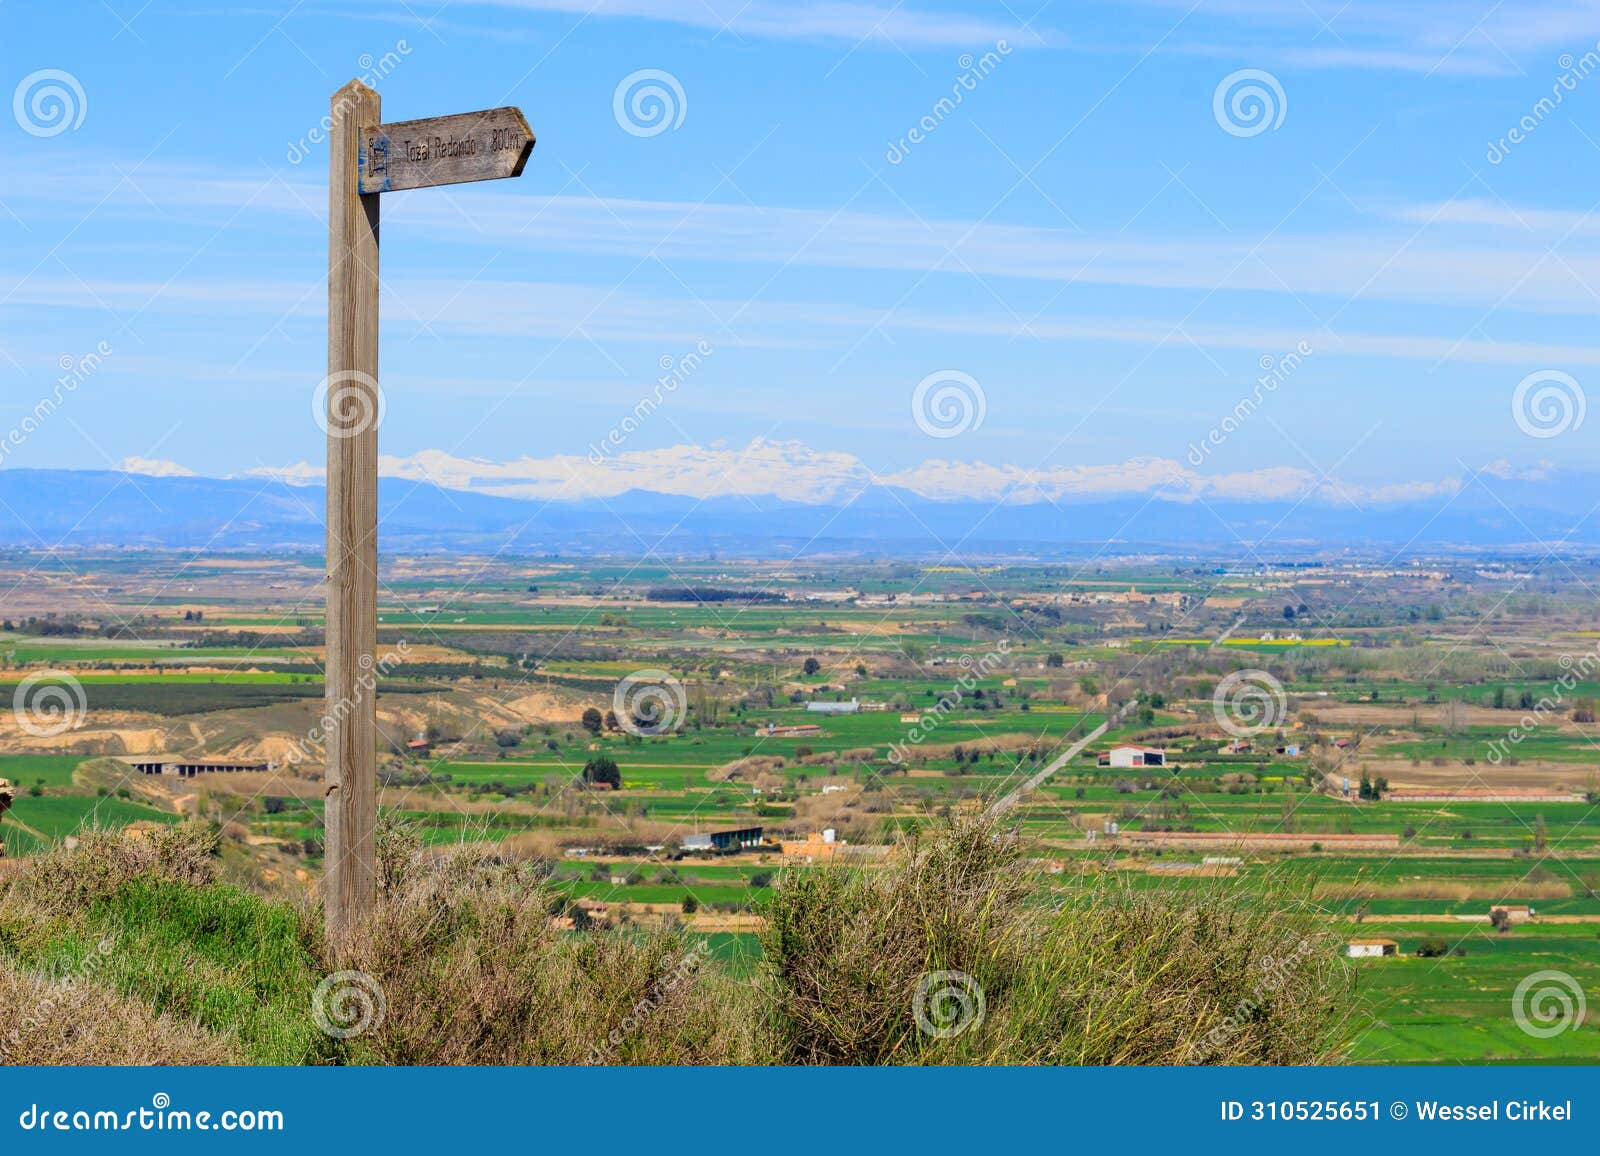 direction sign to observation platform tozal redondo near albalate de cinca, spain